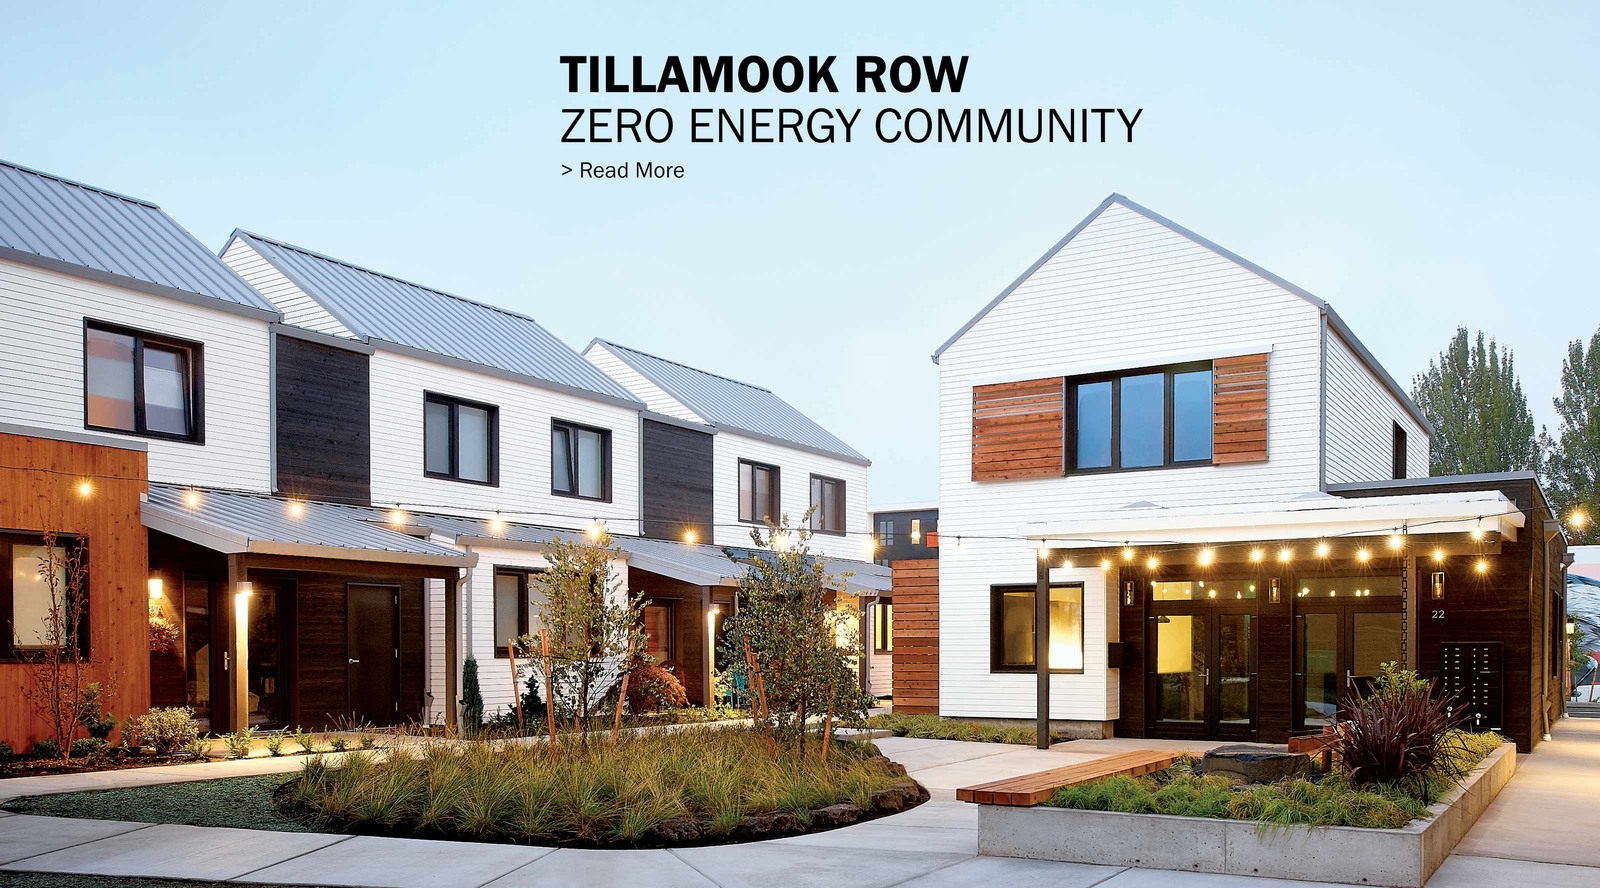 Tillamook Row Zero Energy Community